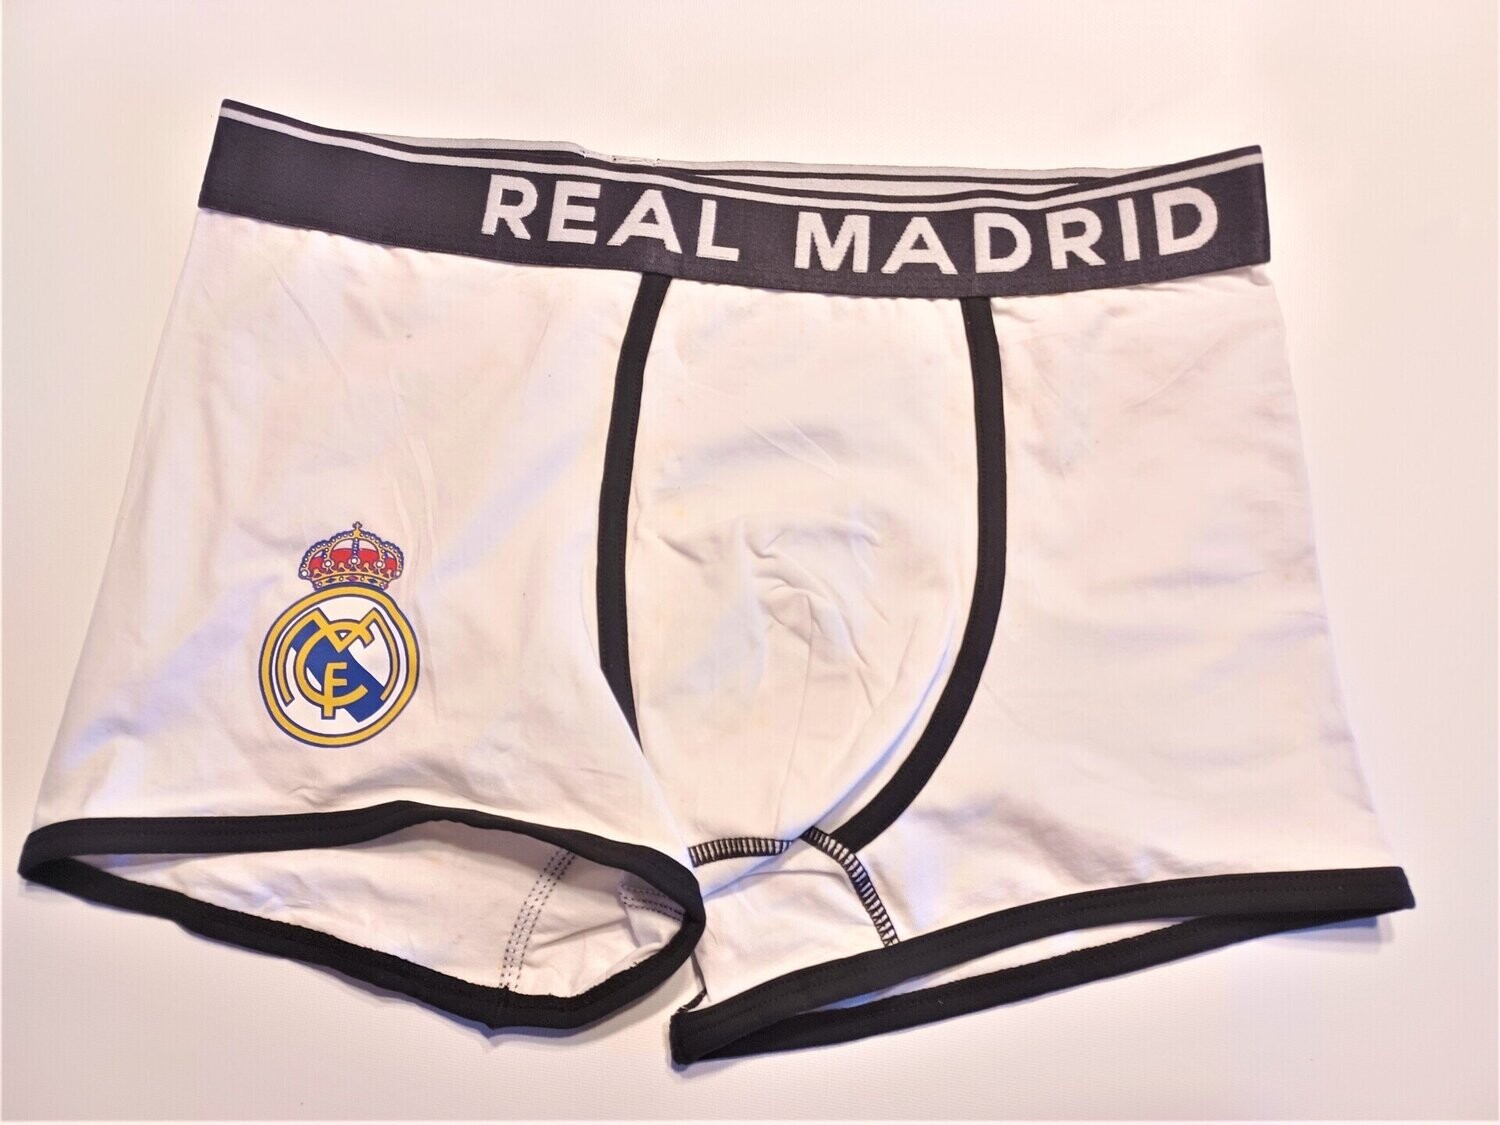 Men's Trunks Underwear Boxer Briefs Short Leg Comfortable Underpants Real Madrid